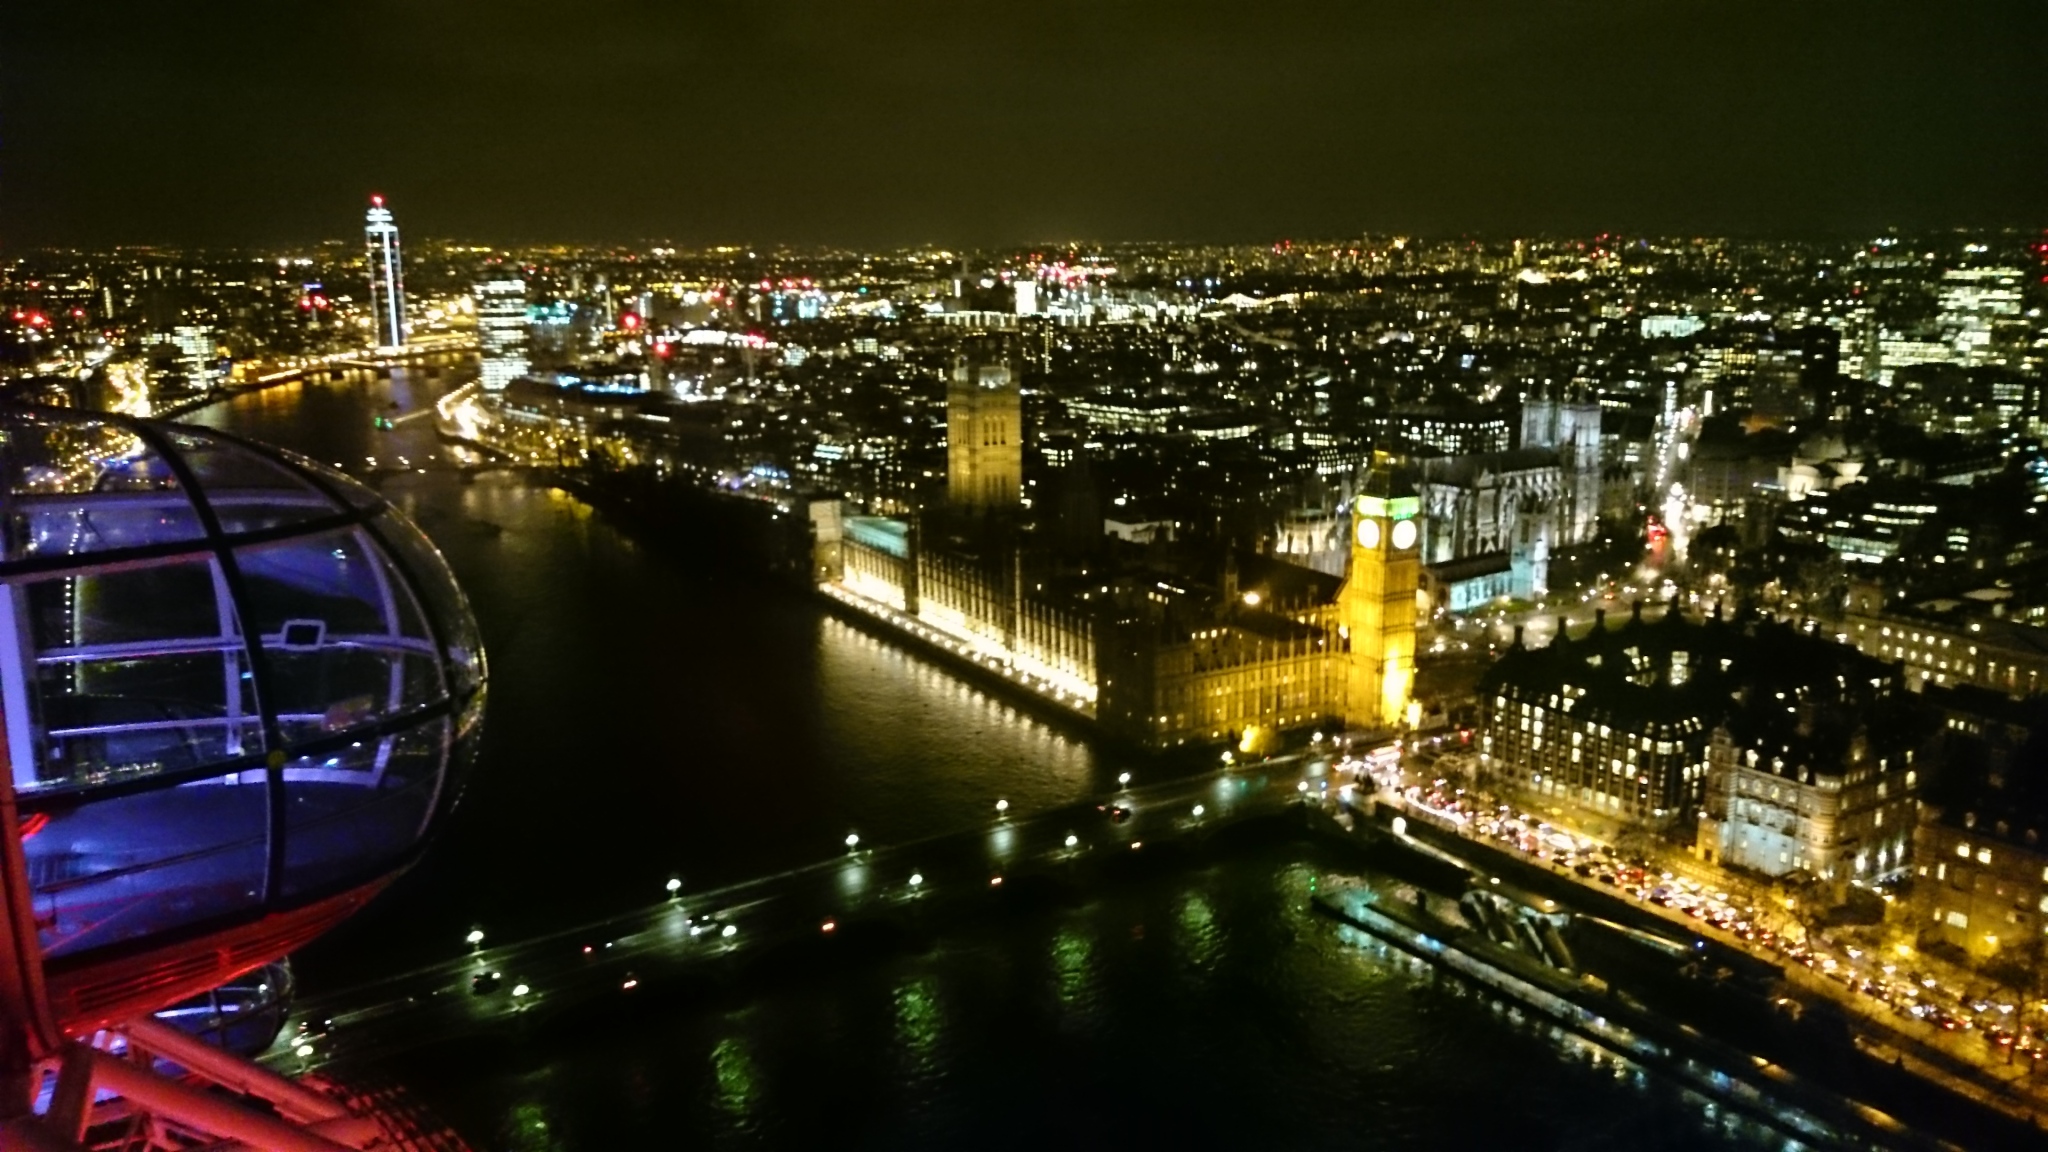 dsc 0819 - Una subida al London Eye de noche